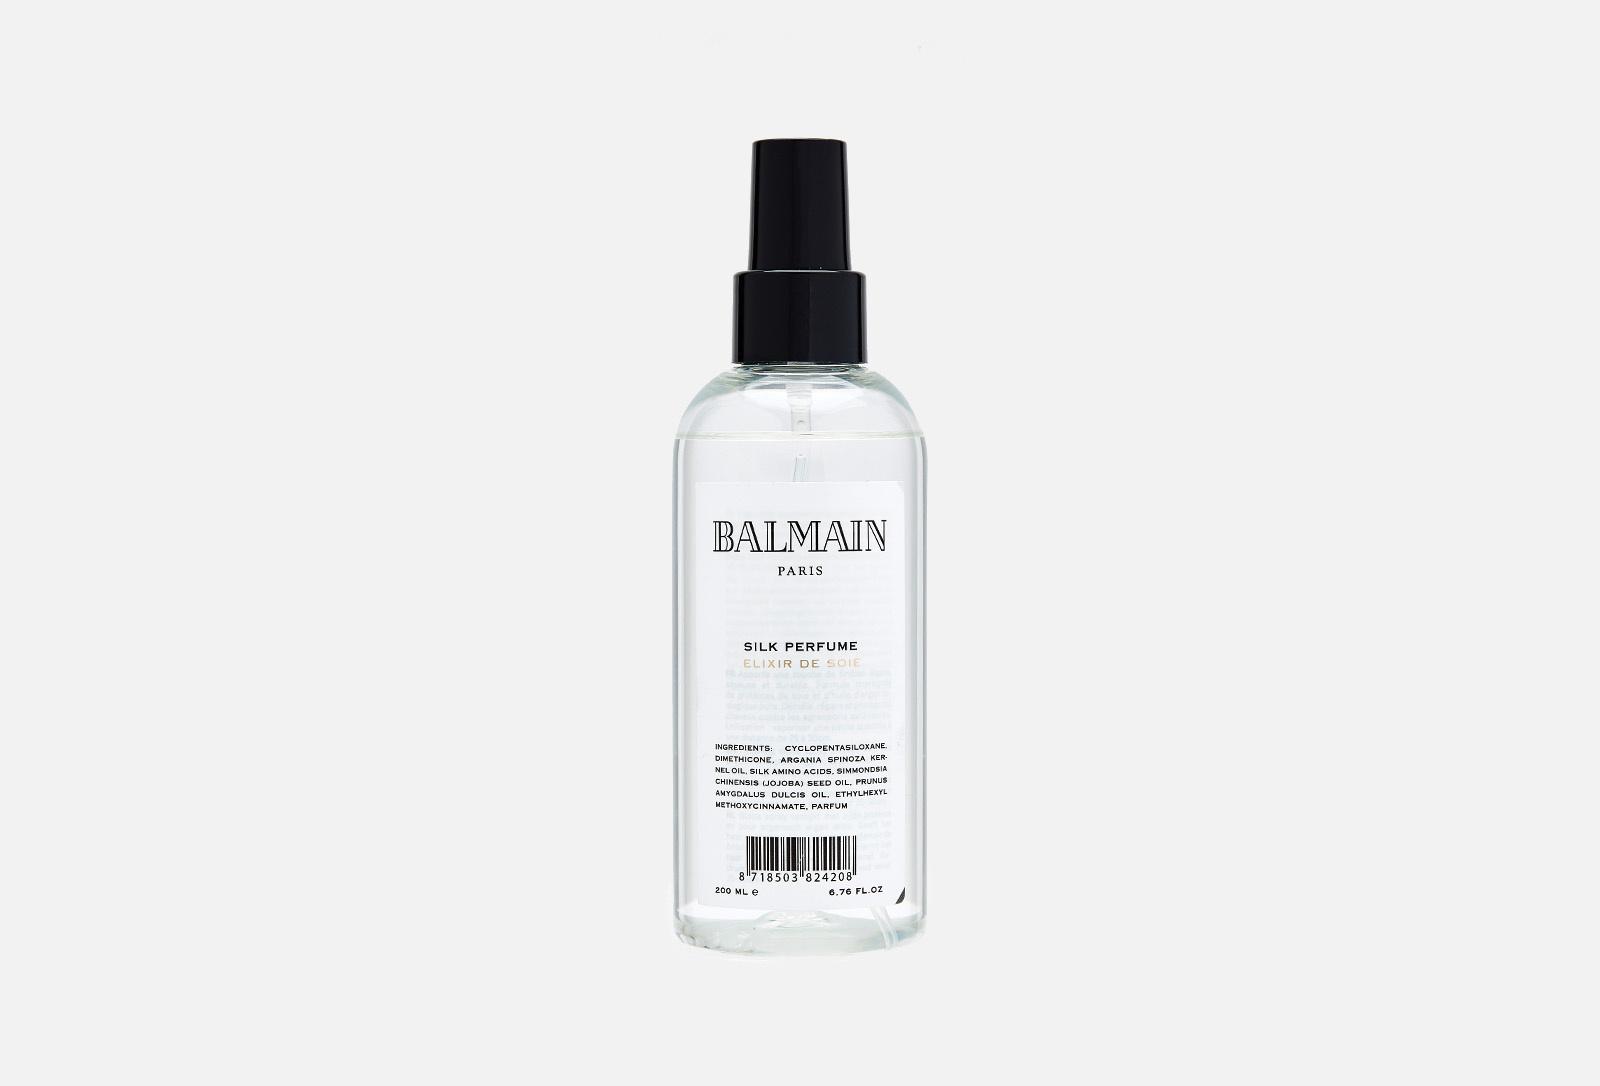 BALMAIN PARIS silk perfume